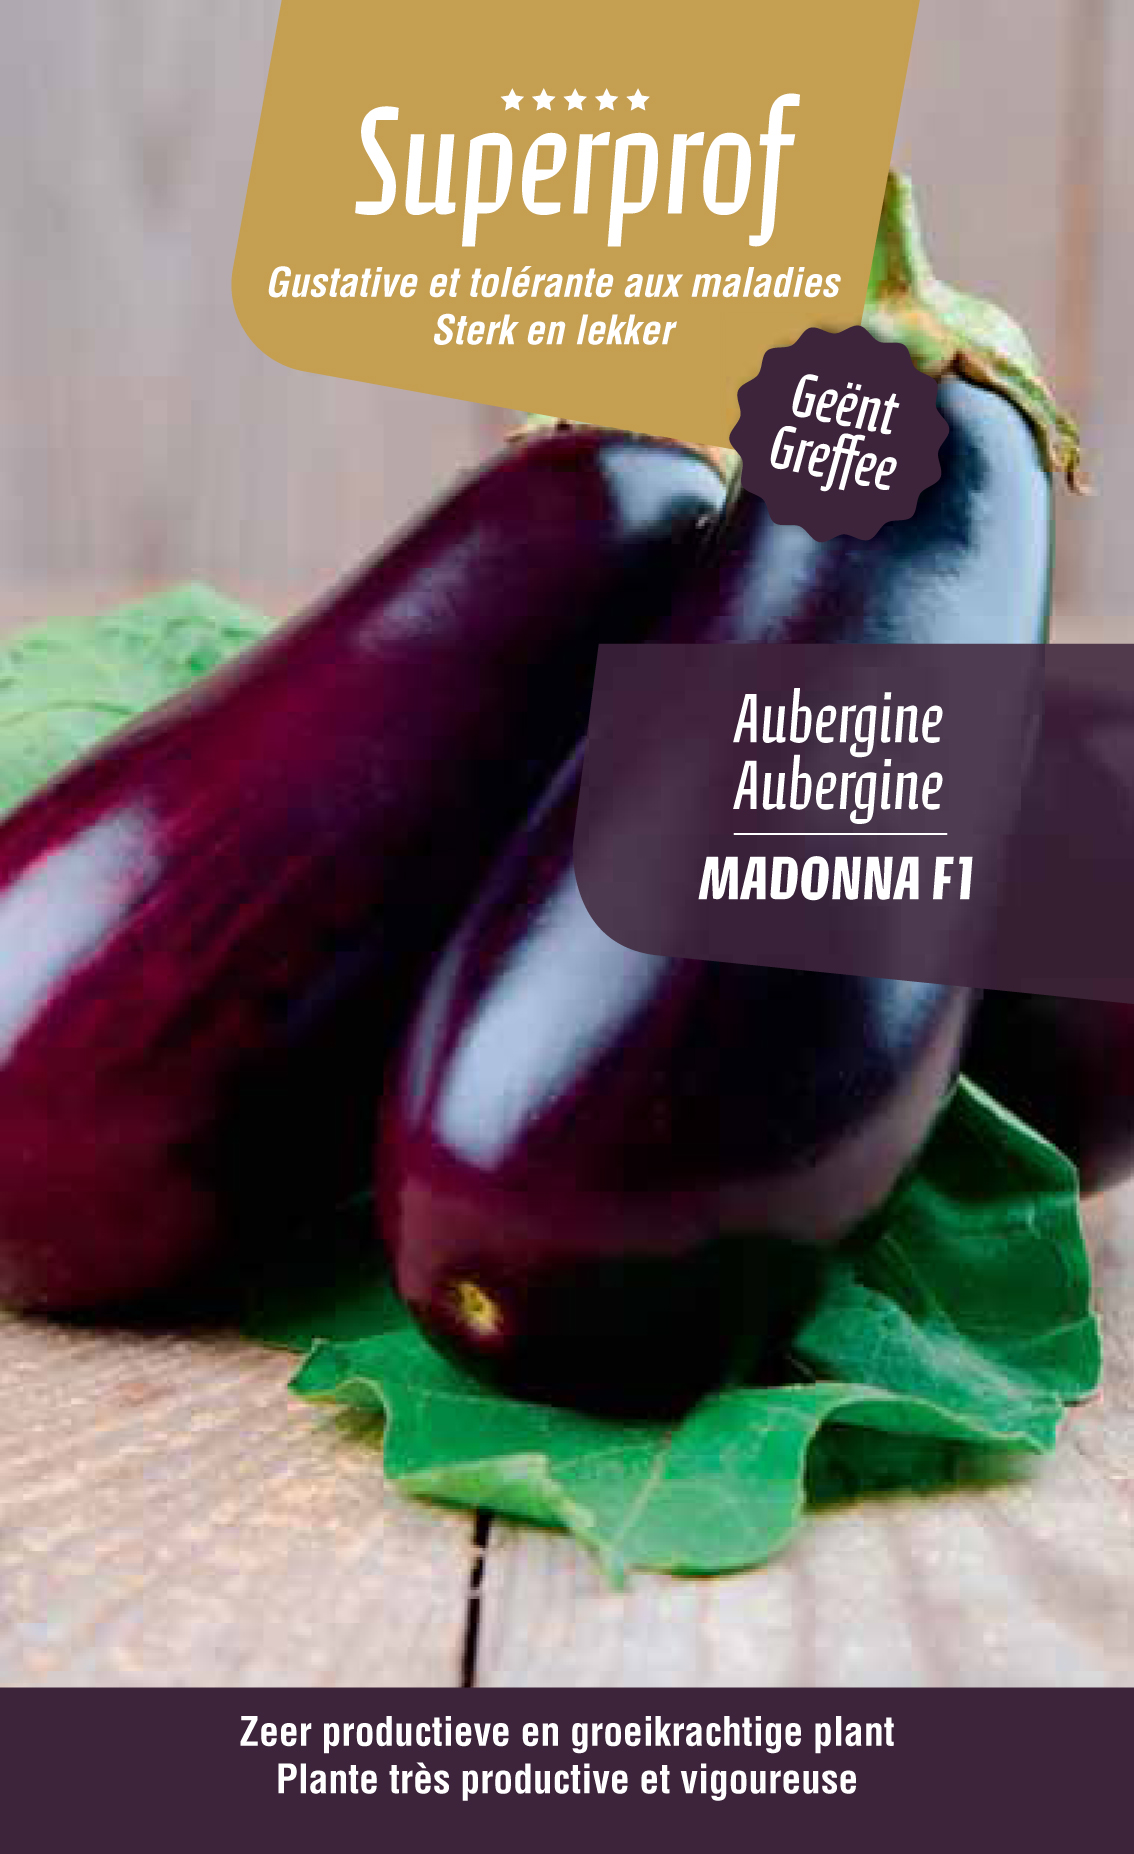 Aubergine greffée Madonna F1 (tray 8 pot)